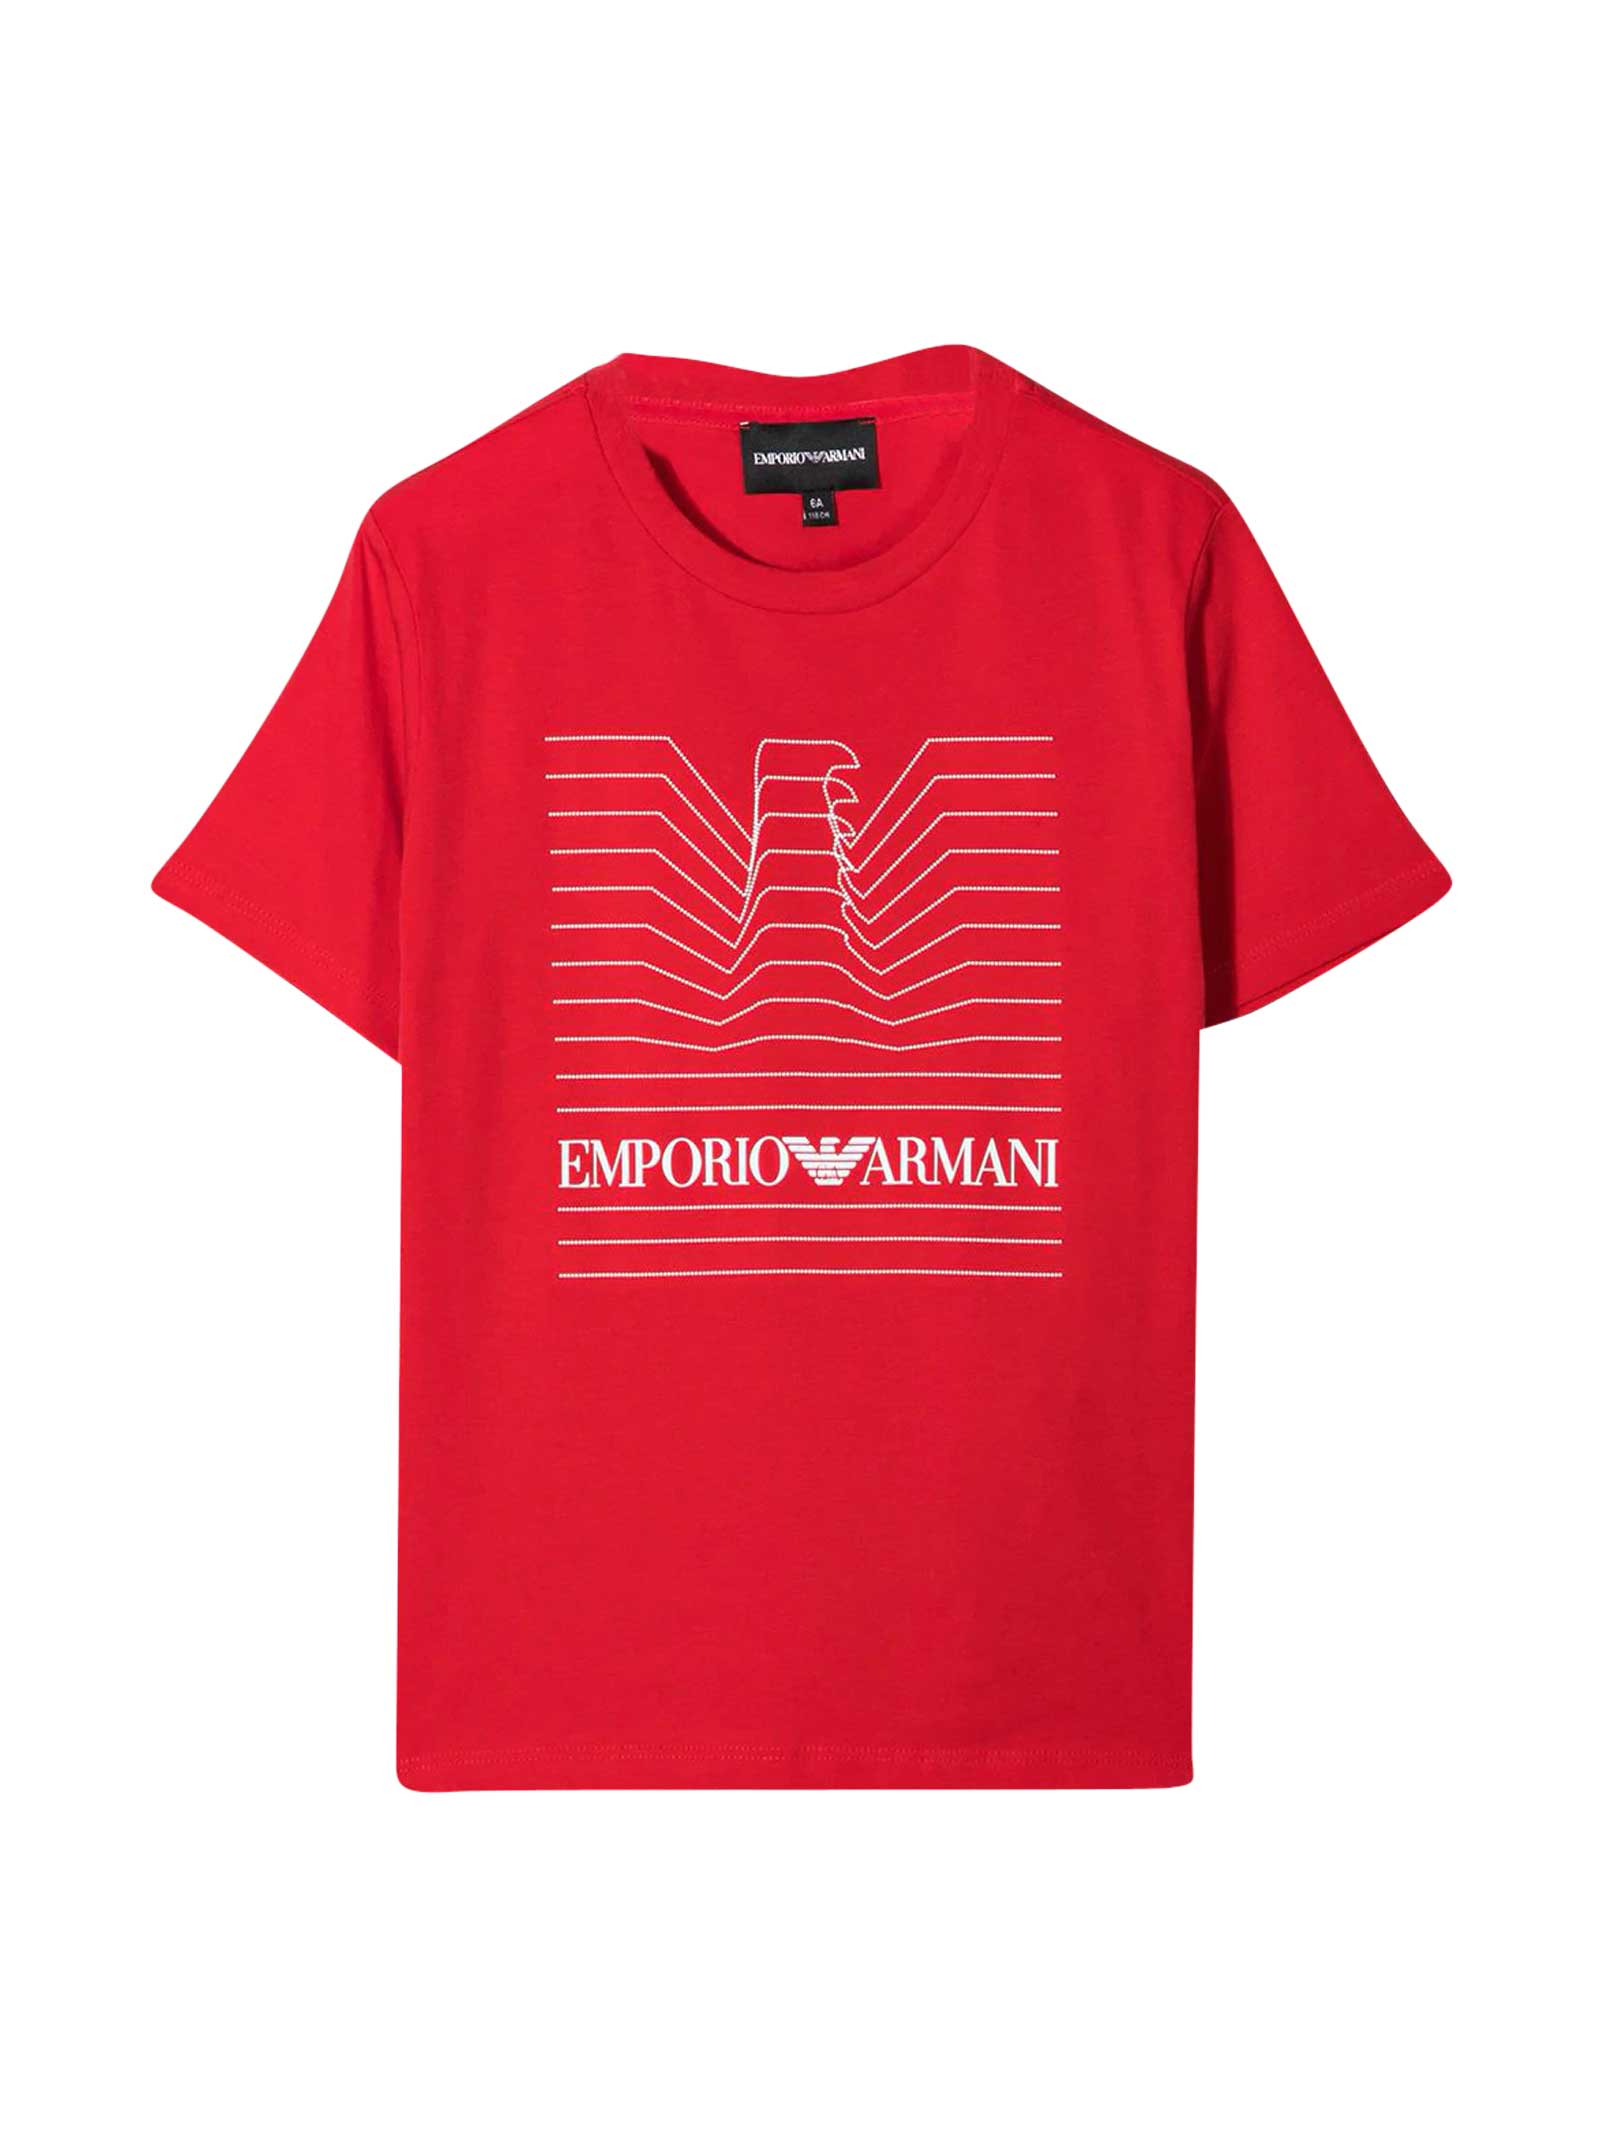 Emporio Armani Red T-shirt